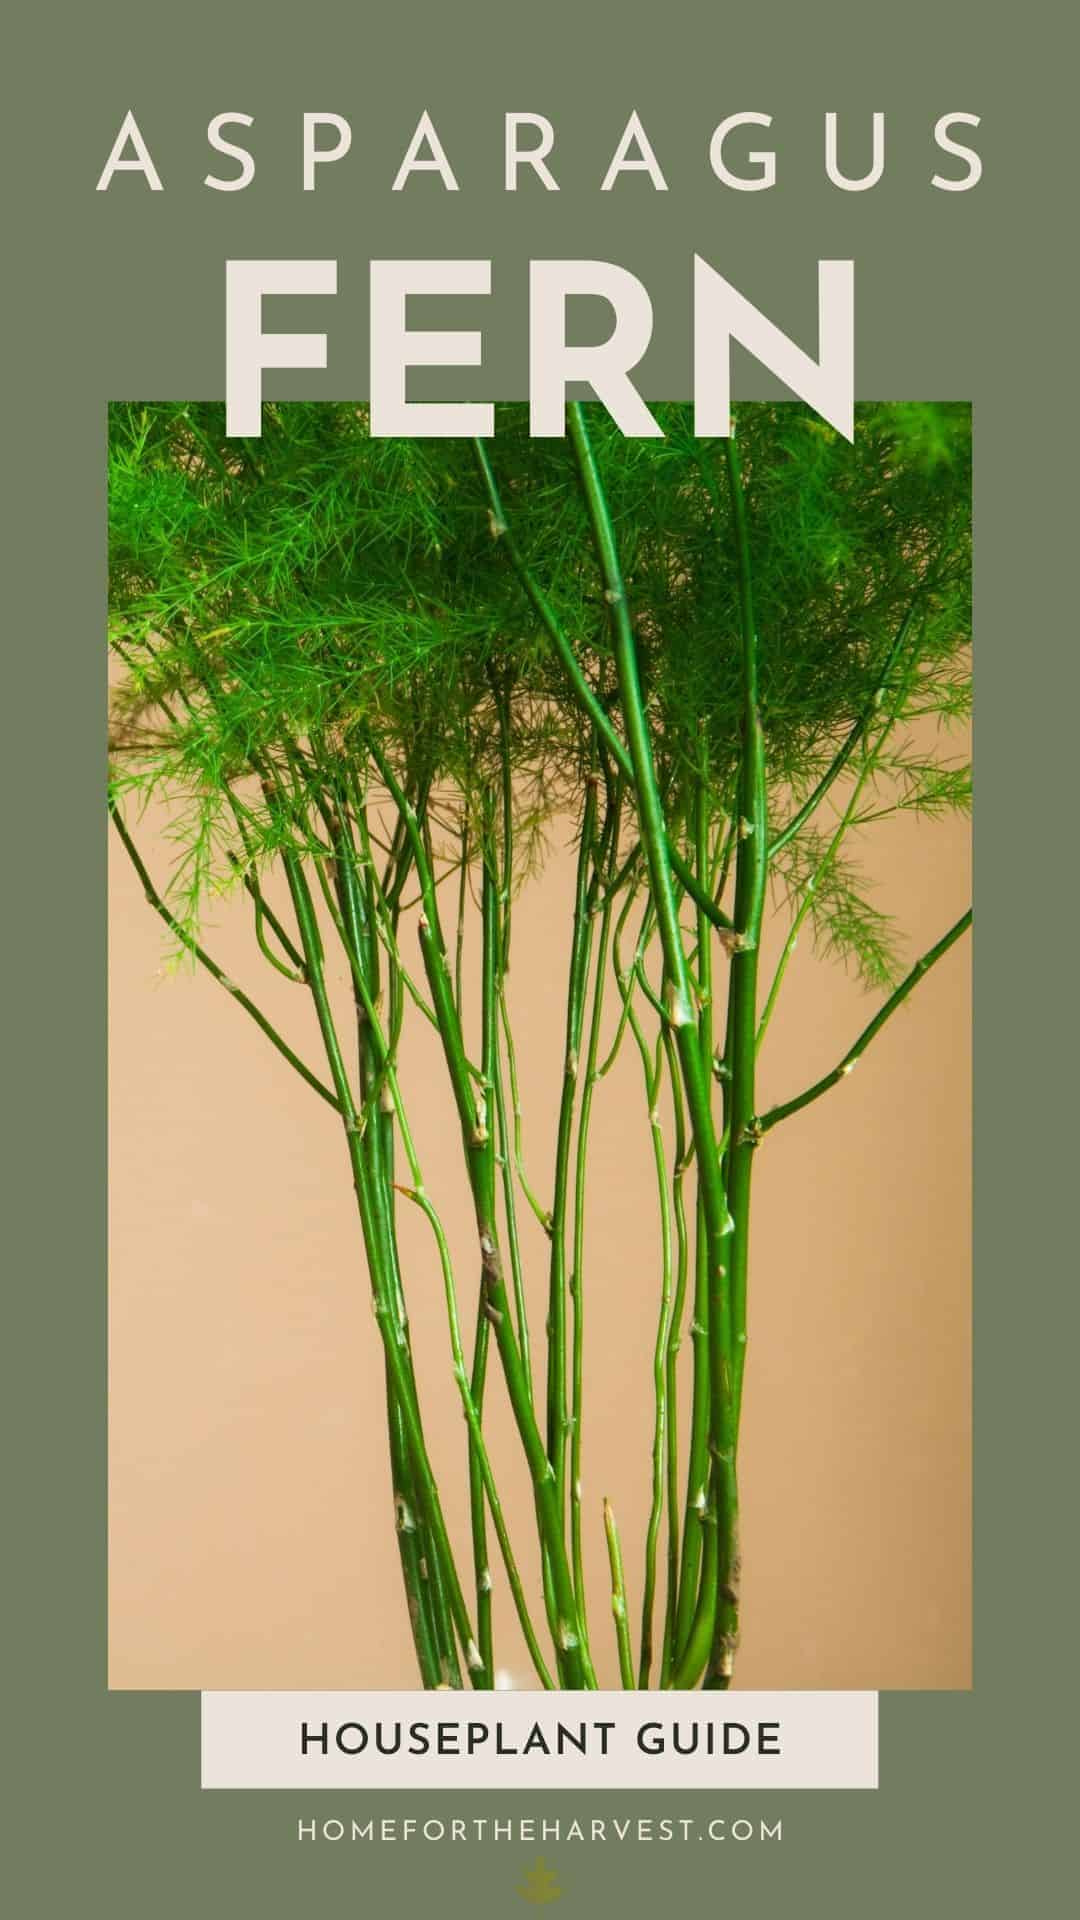 Asparagus fern via @home4theharvest